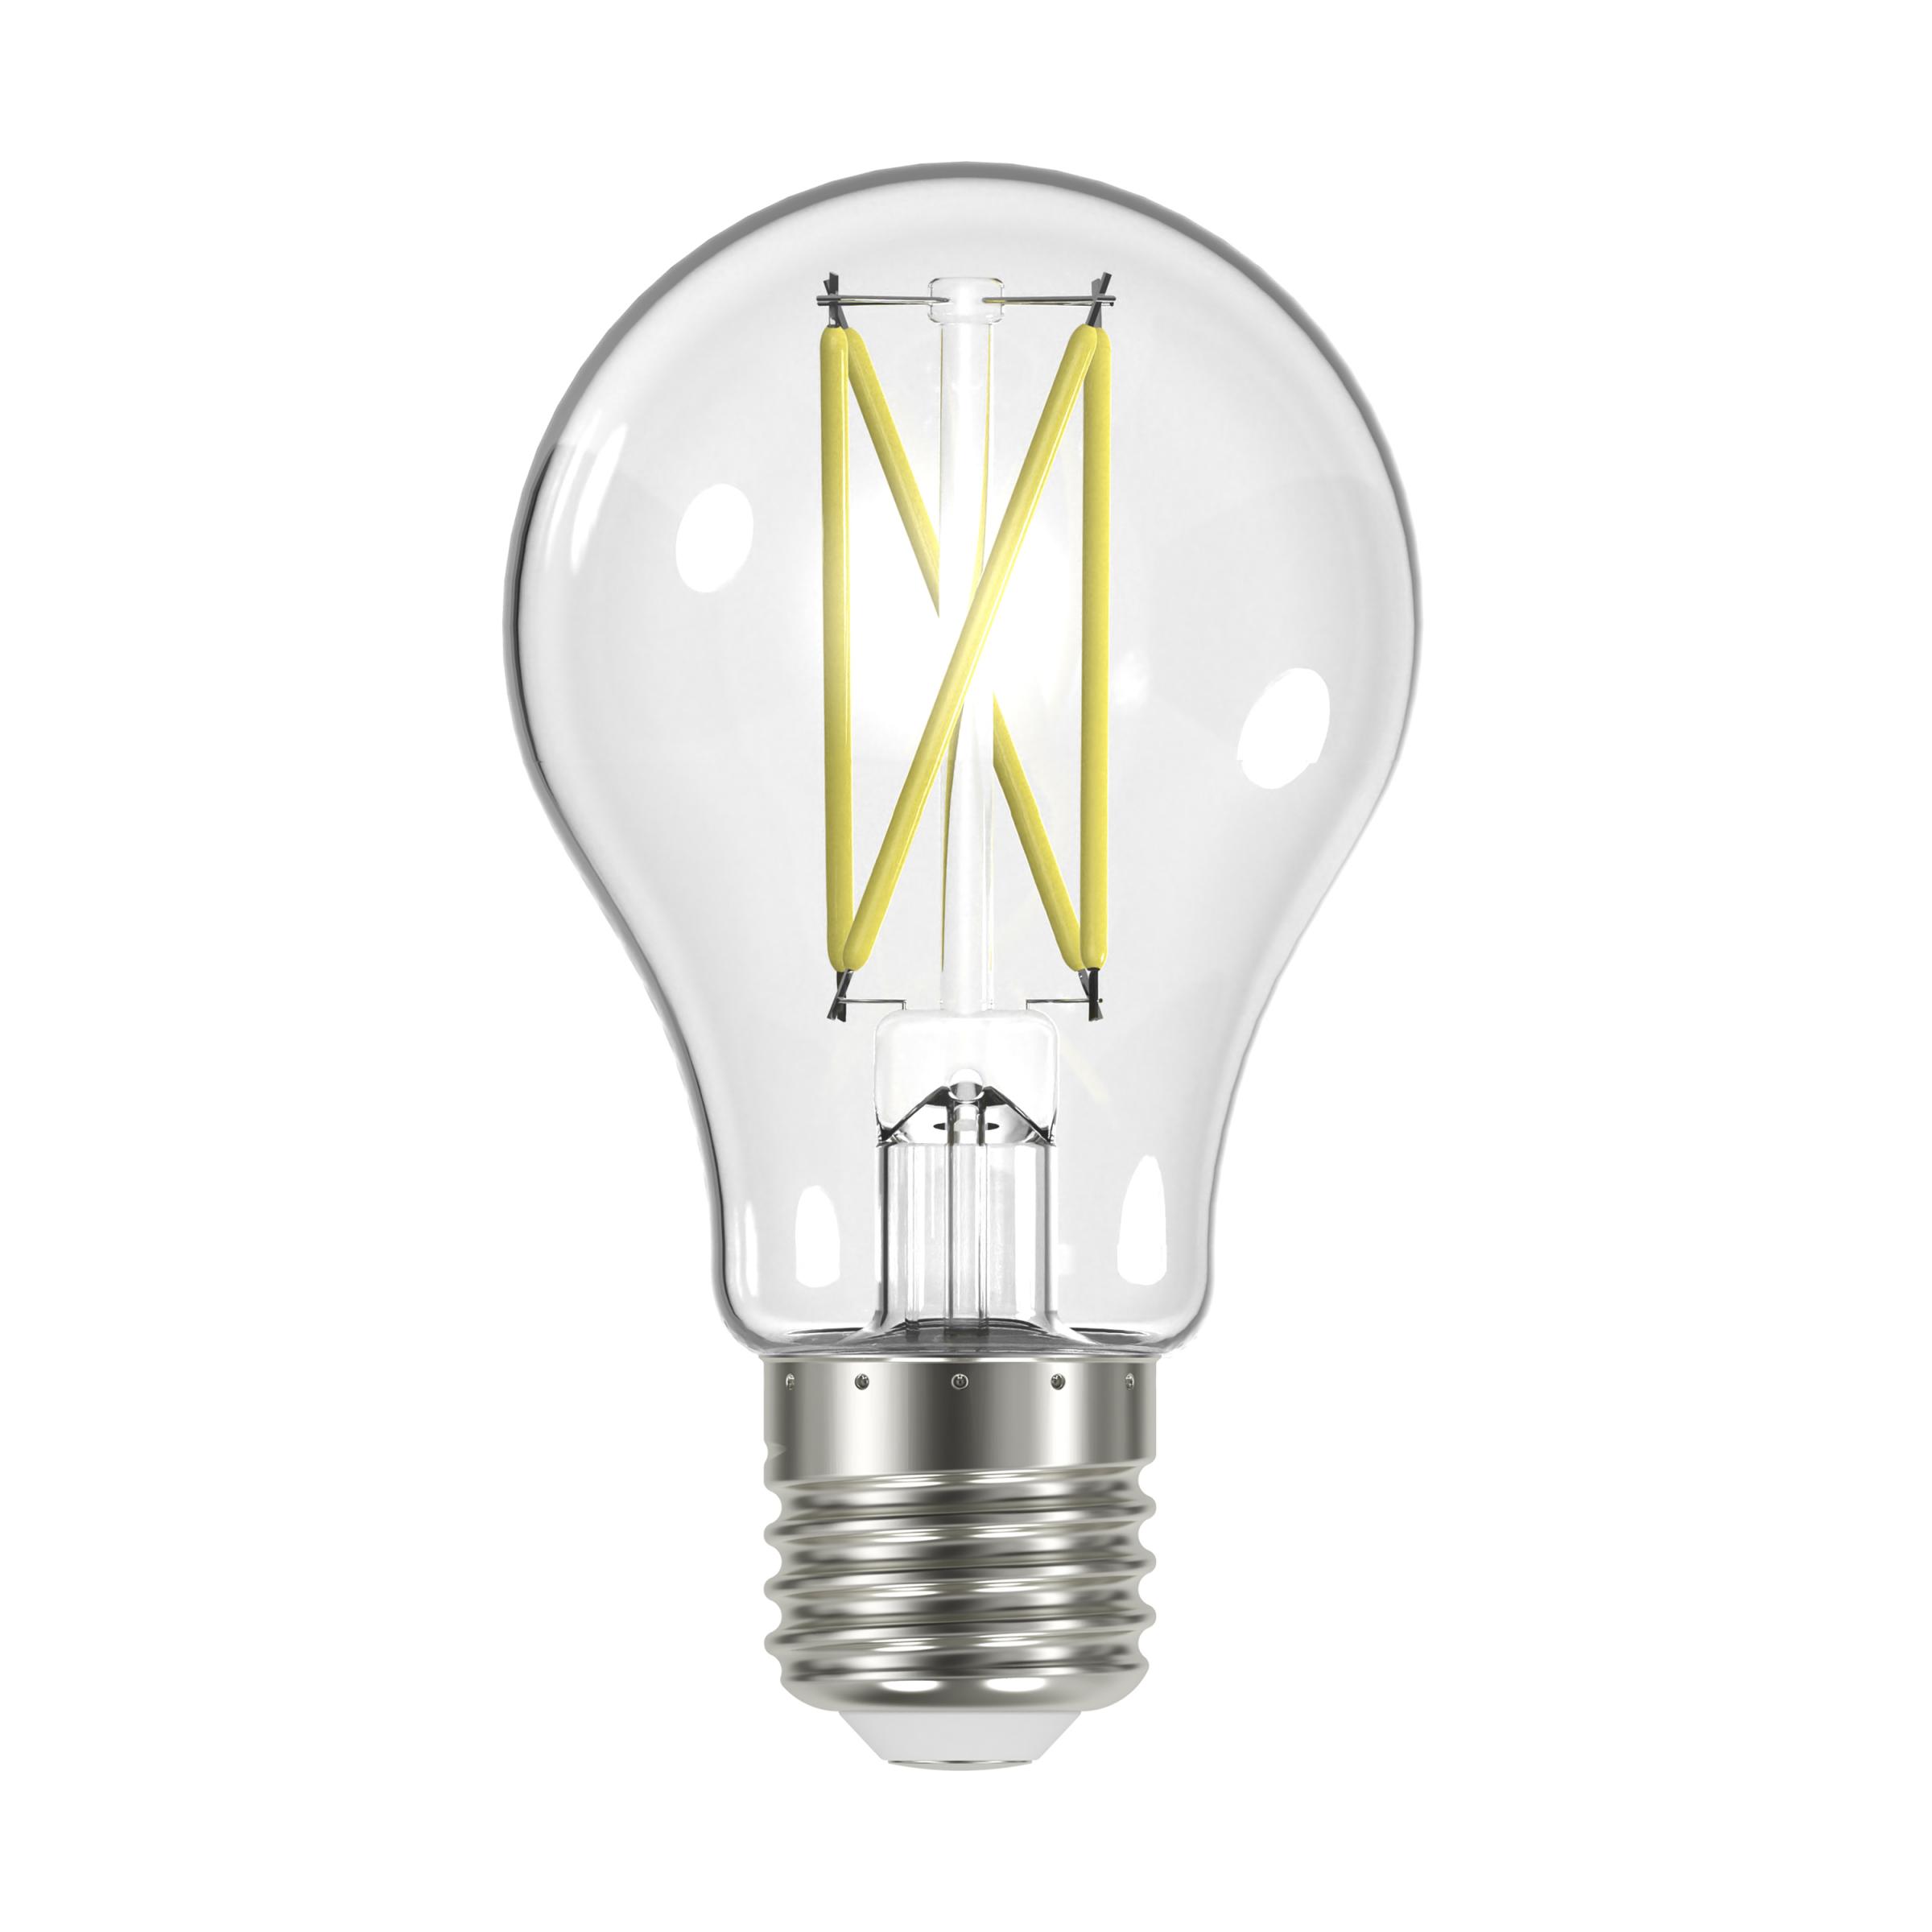 LED Lamps & Tubes